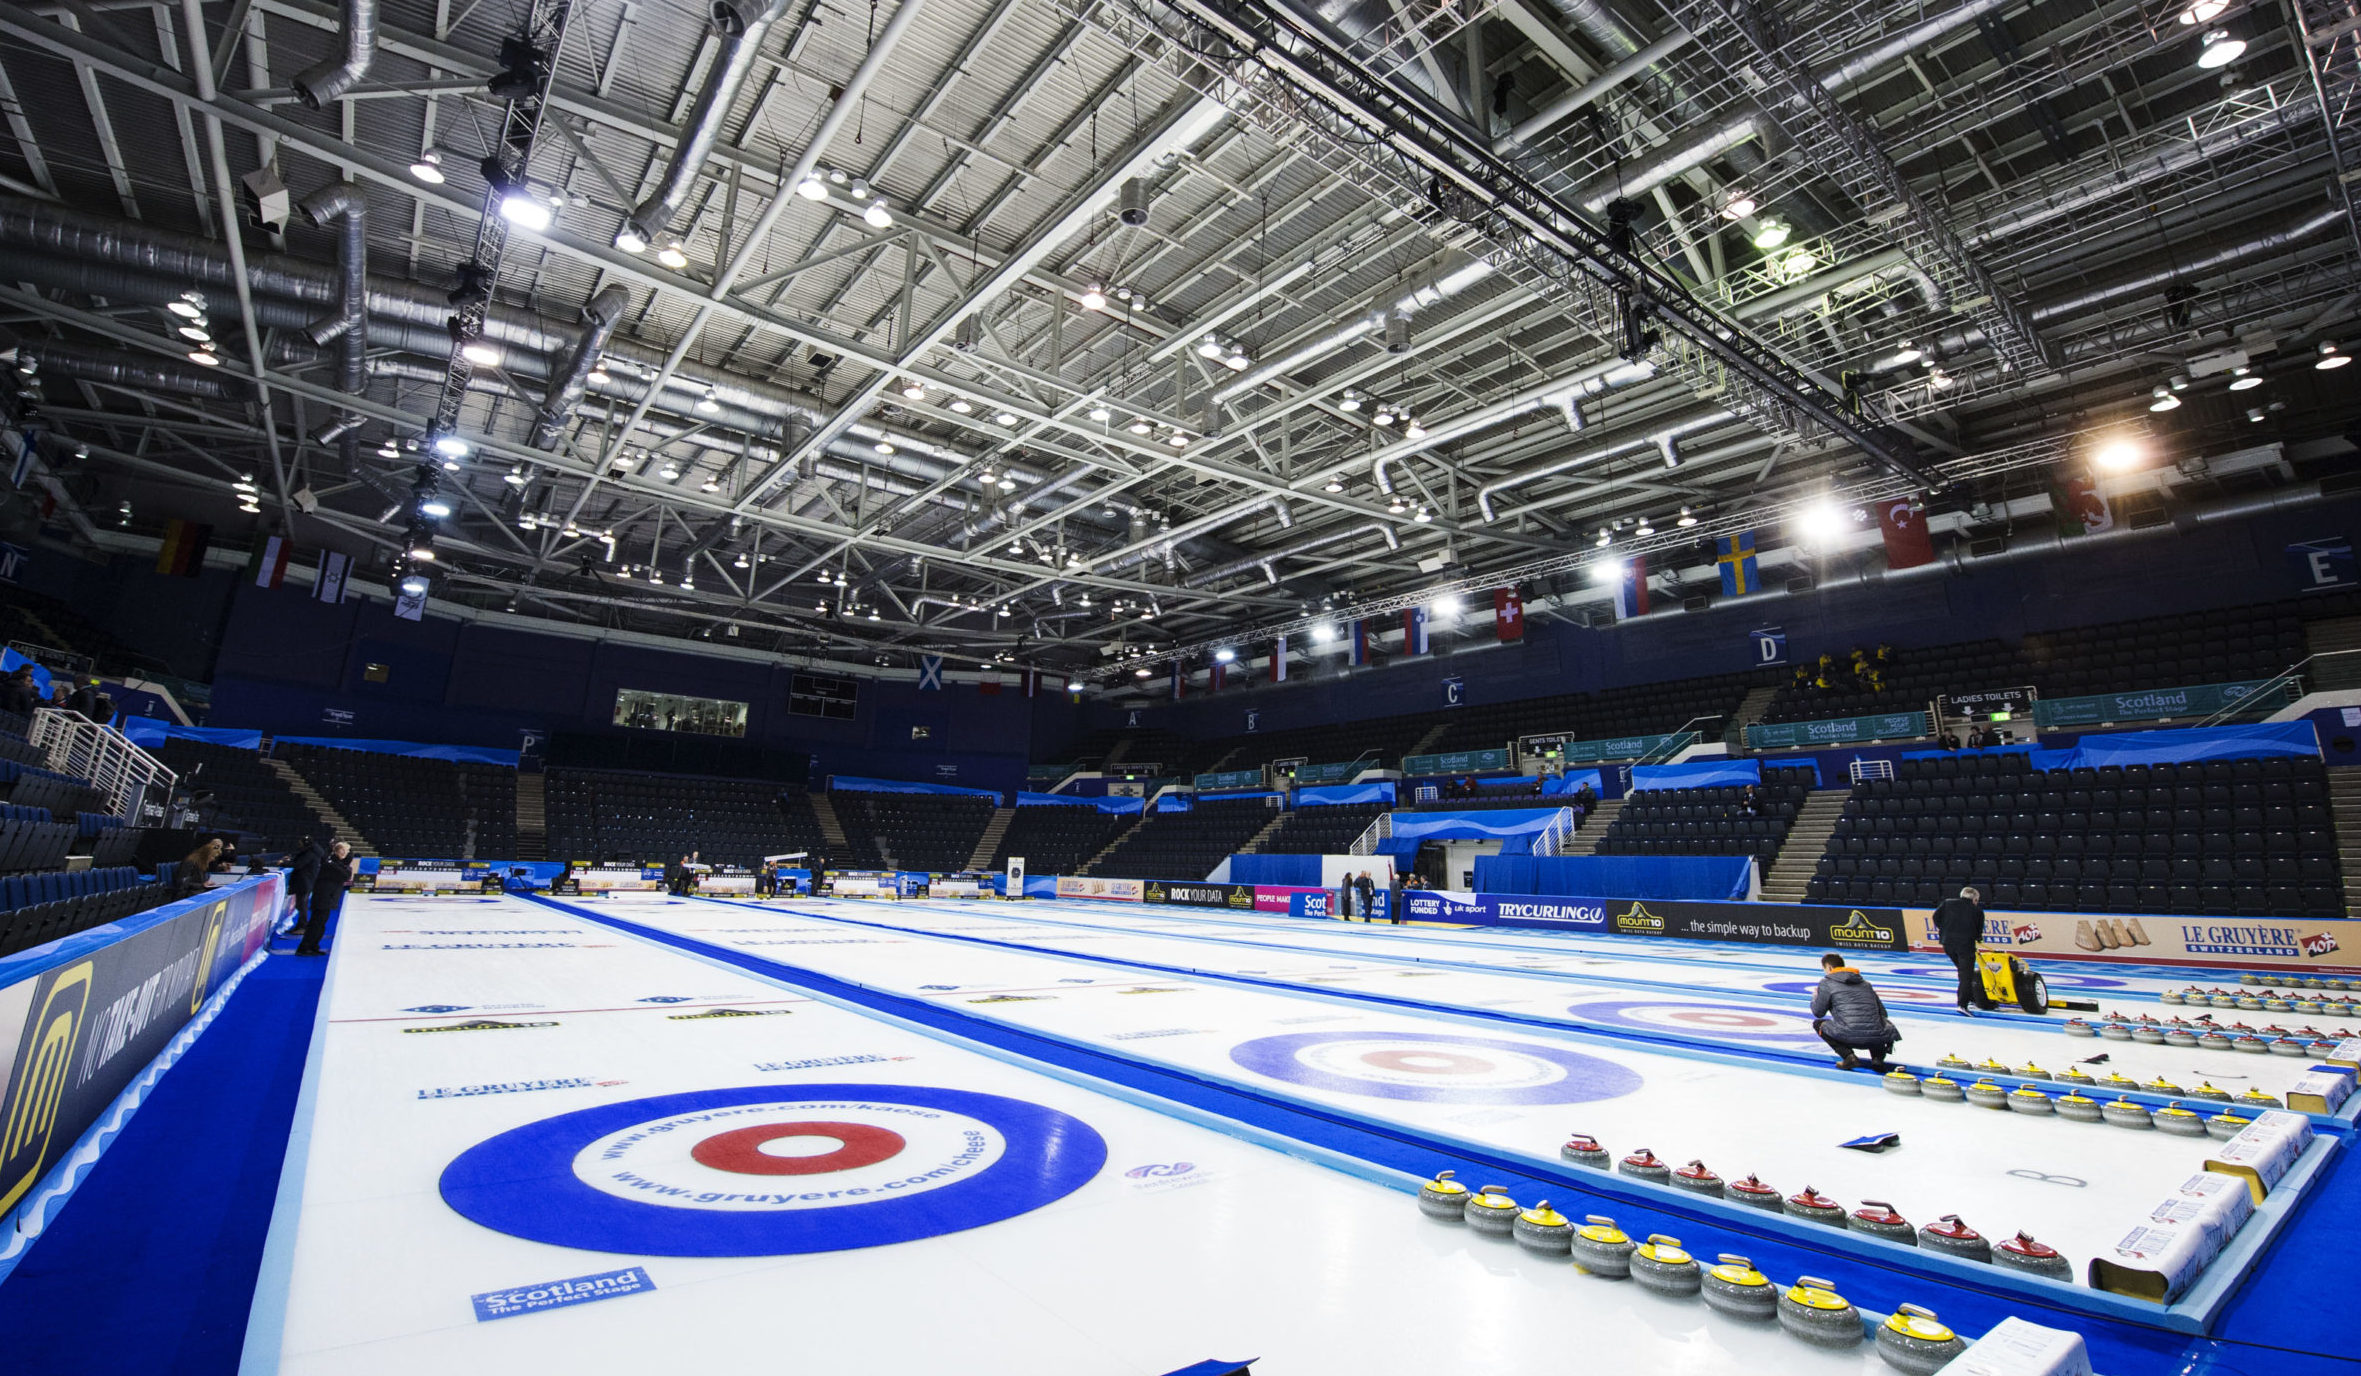 Curling facilities still aren't re-opening.